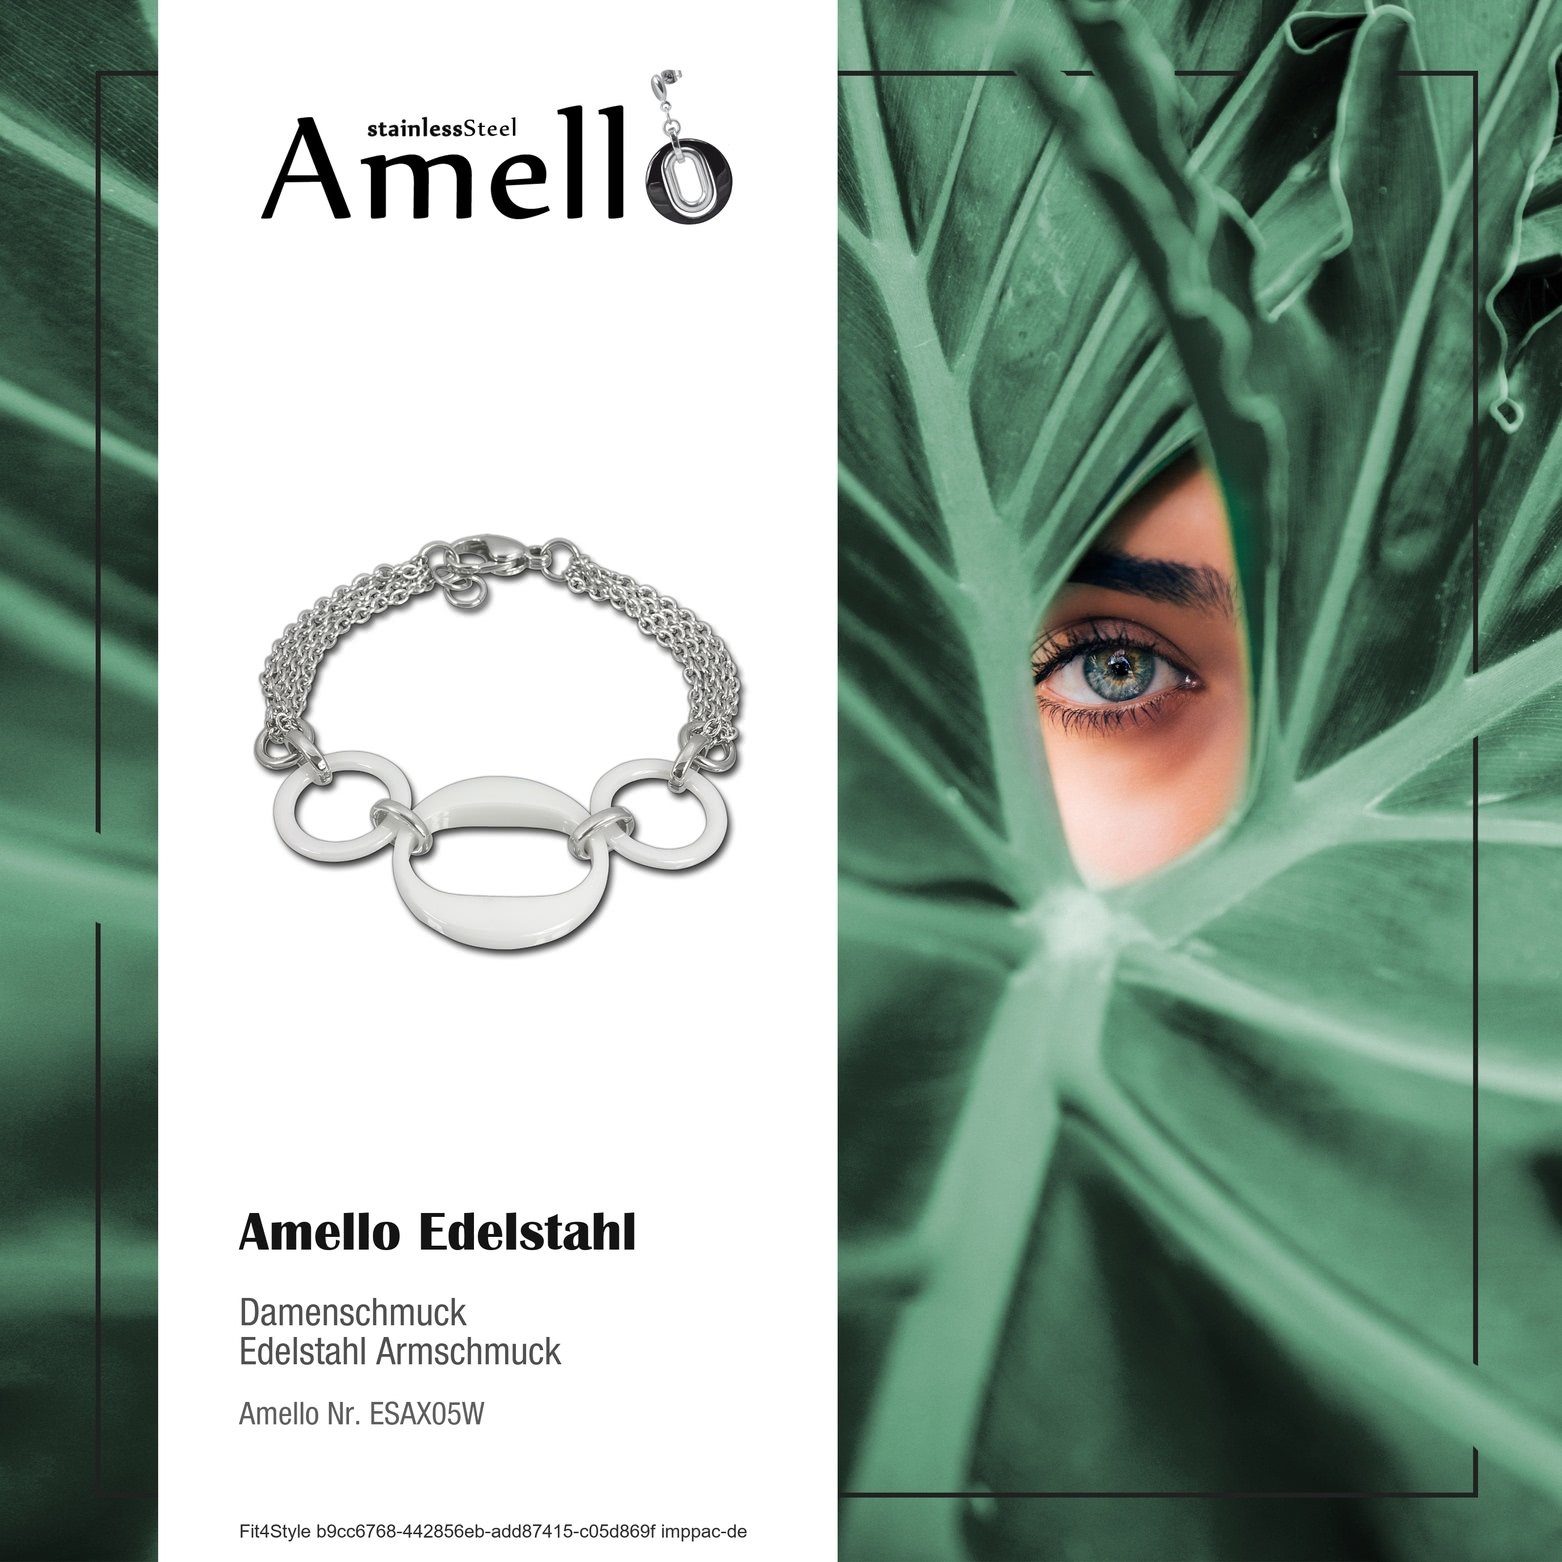 Amello Edelstahlarmband Amello 3 Ringe Armband (Armband), silber für Damen Steel) Edelstahl Armbänder weiß (Stainless